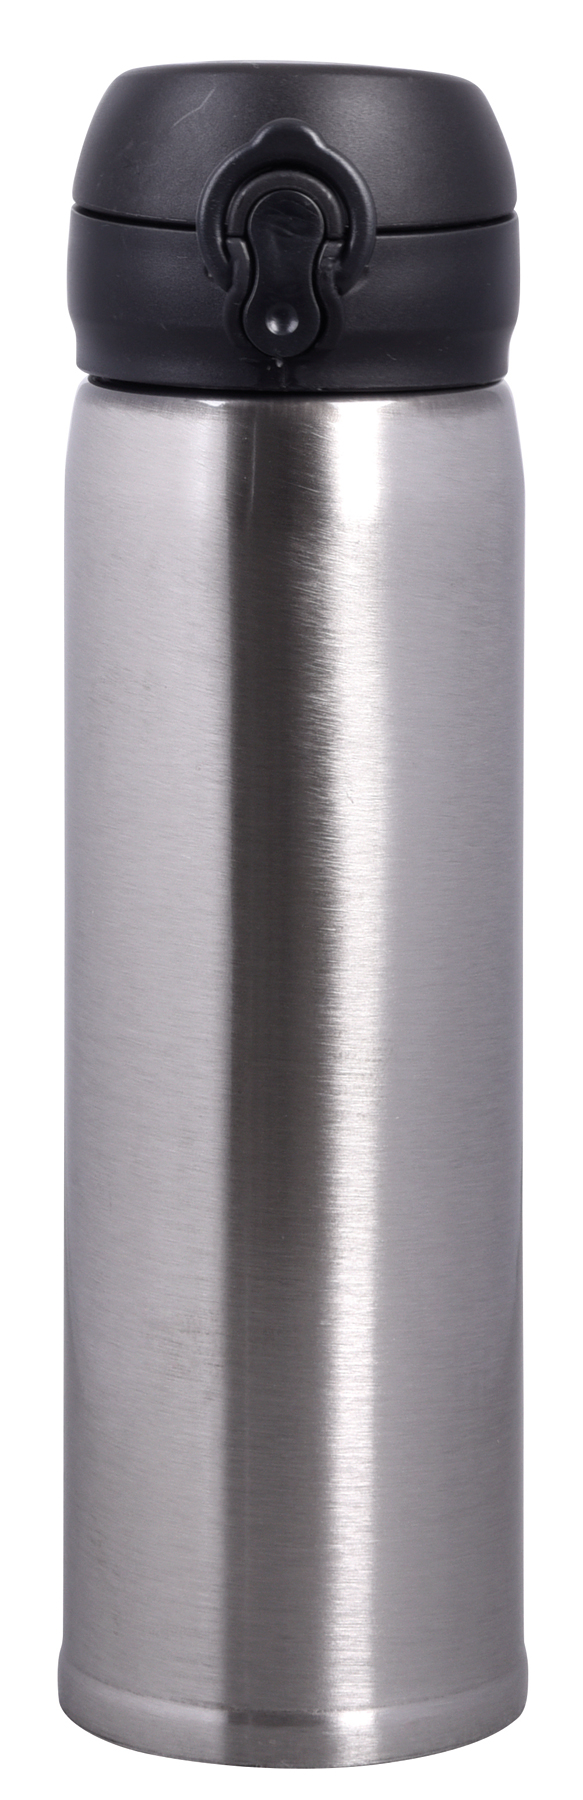 Vacuum flask OOLONG - silver